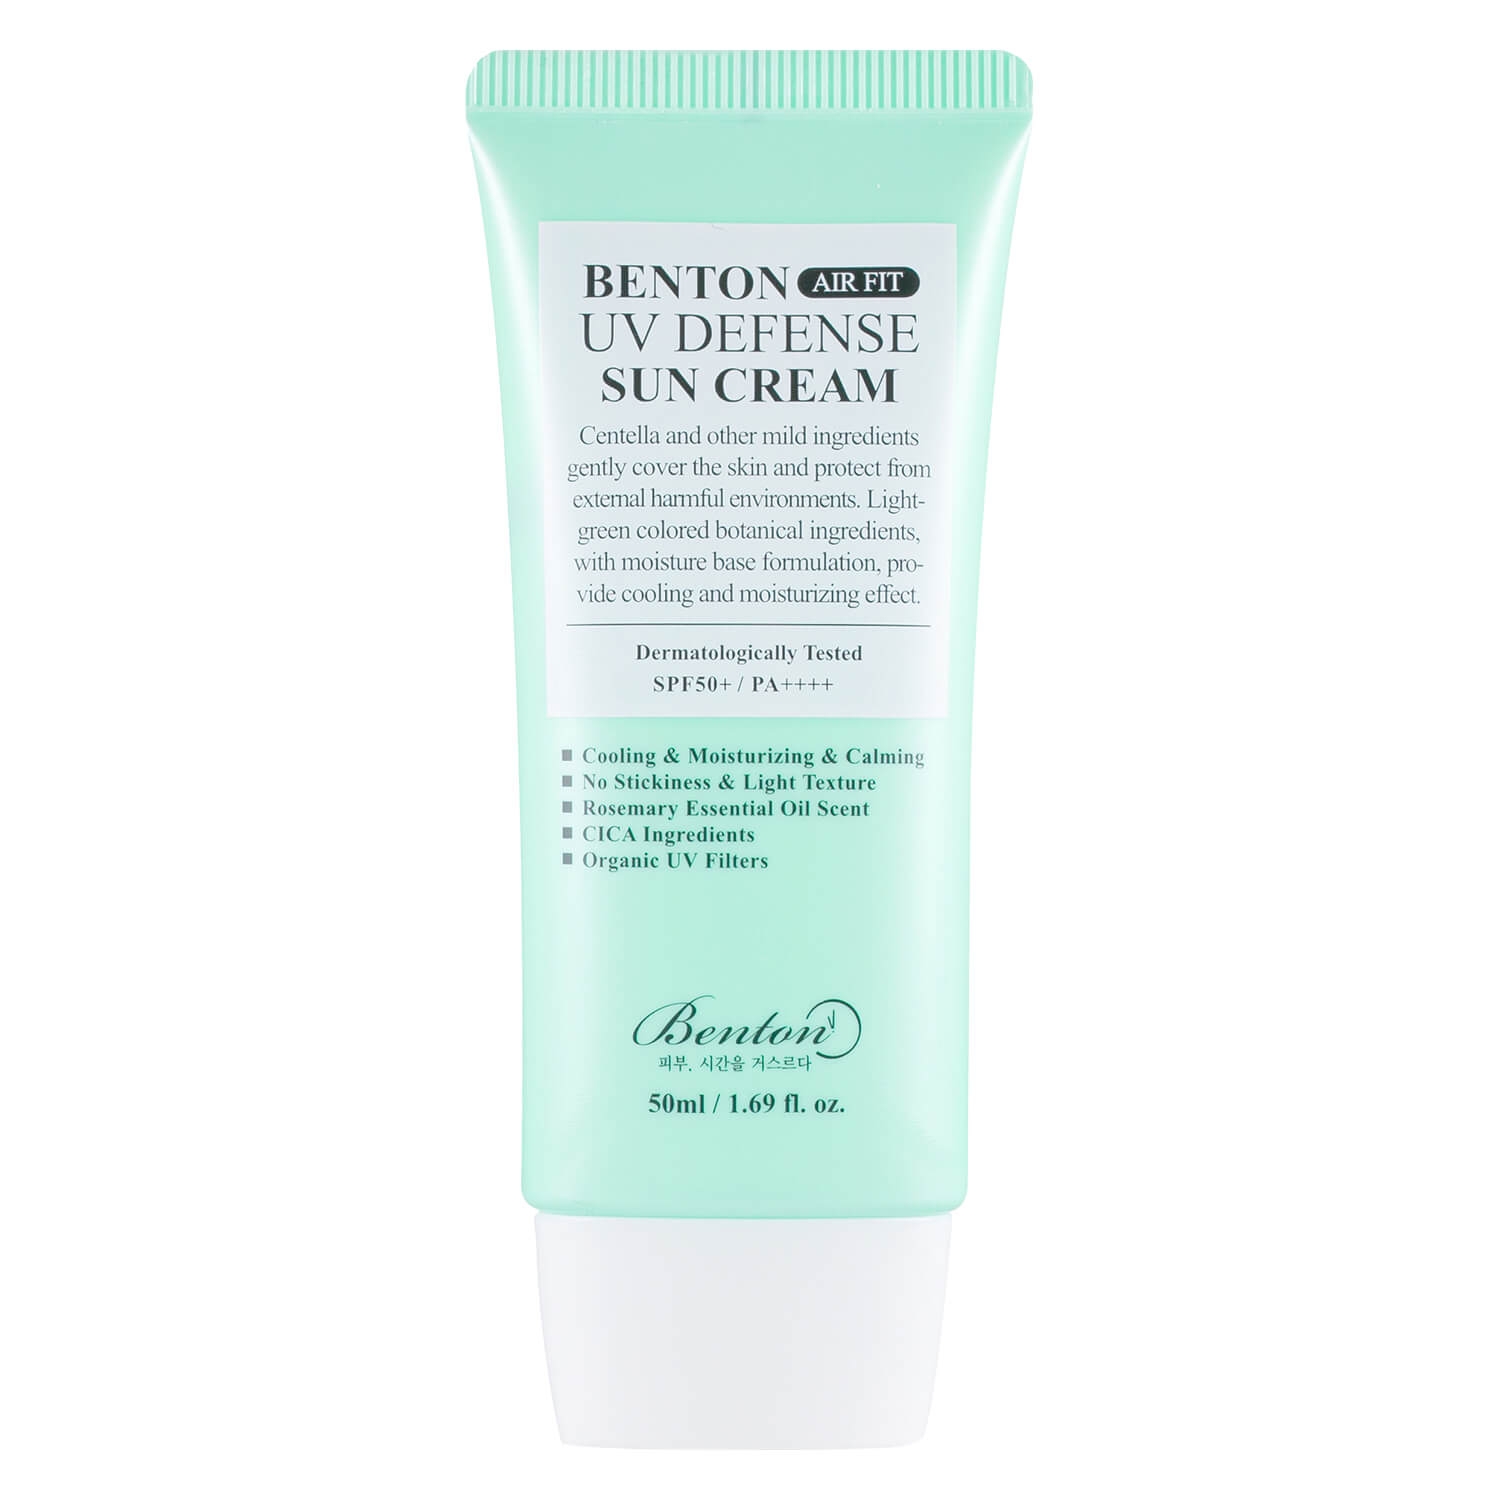 Image du produit de Benton - Air Fit UV Defense Sun Cream SPF 50+